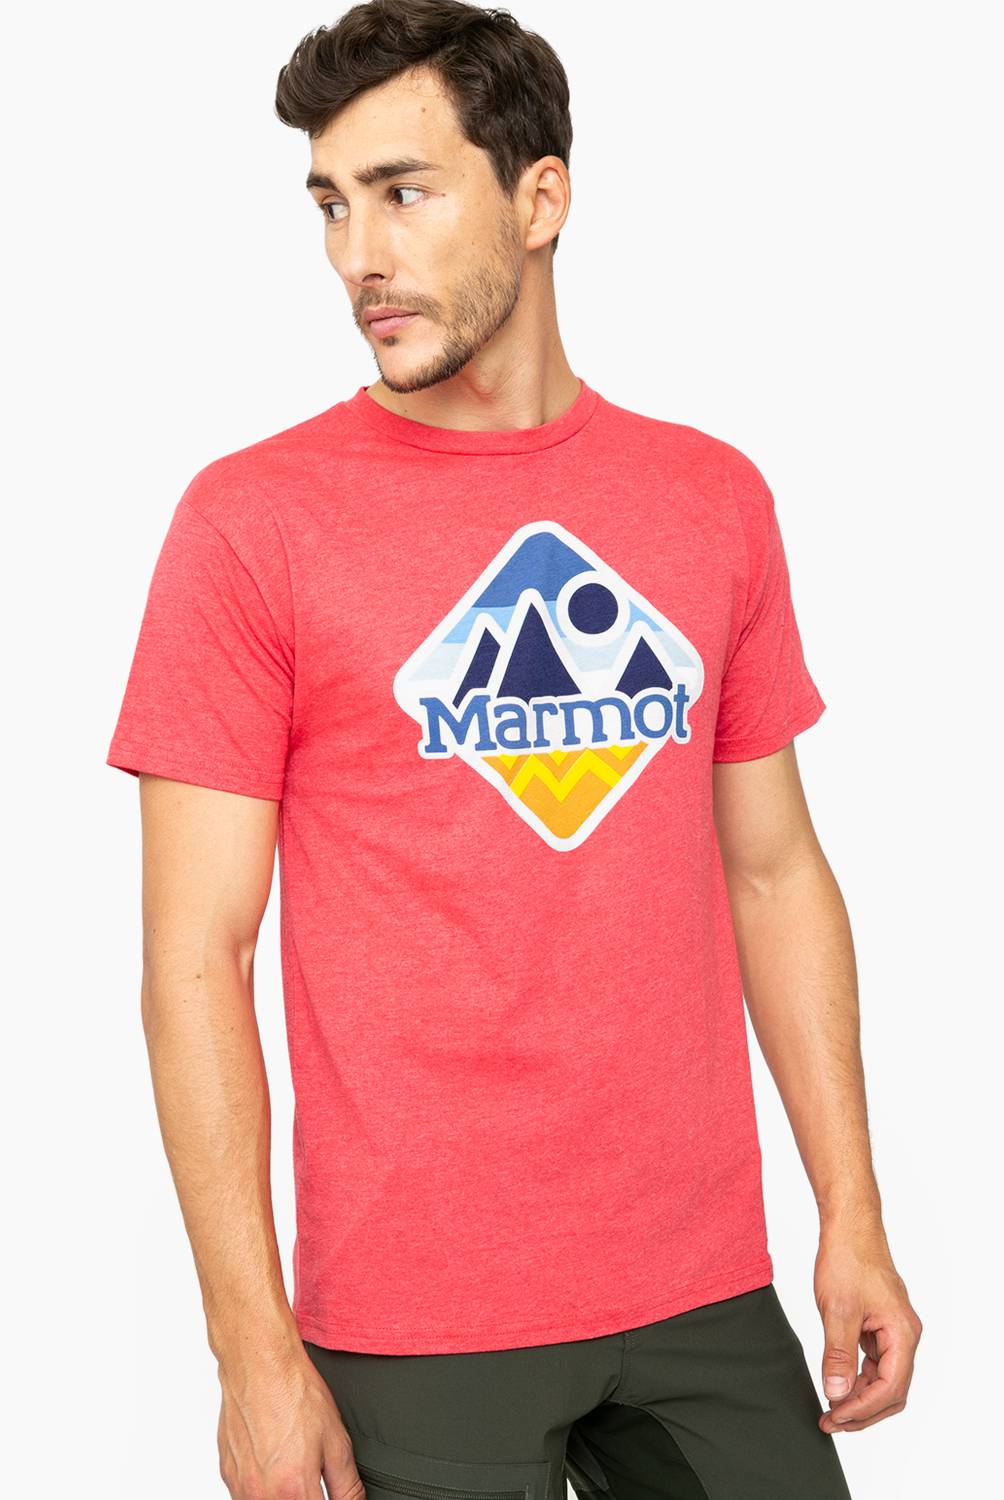 Marmot - Polera deportiva